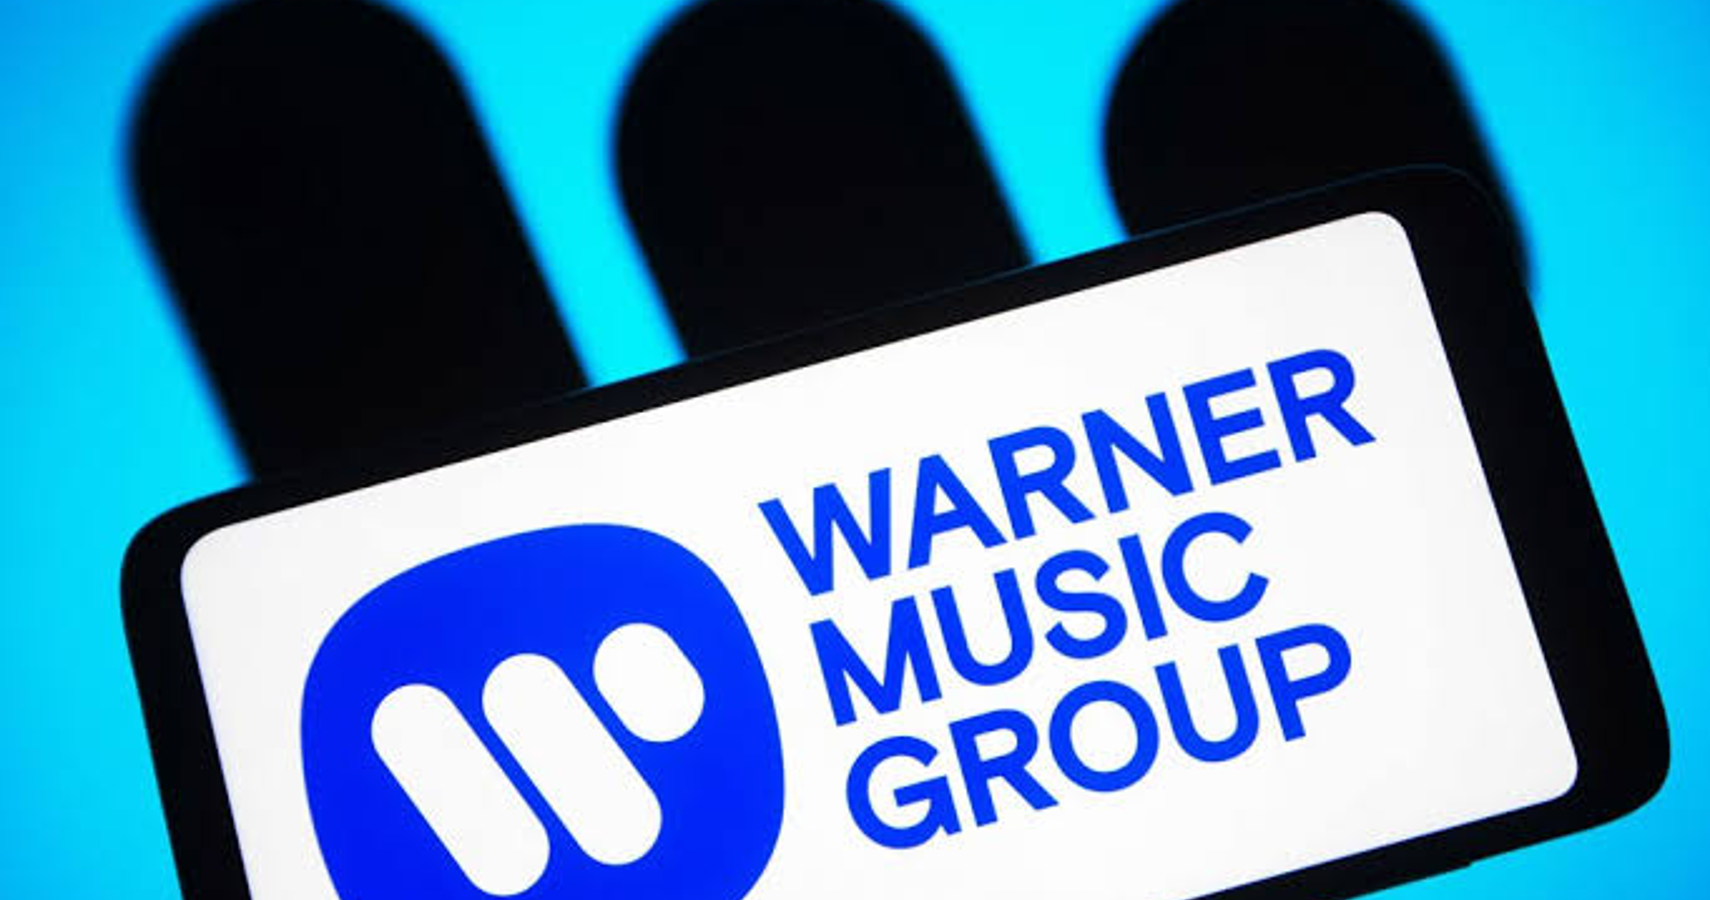 Warner Music Group Logo on a smartphone 